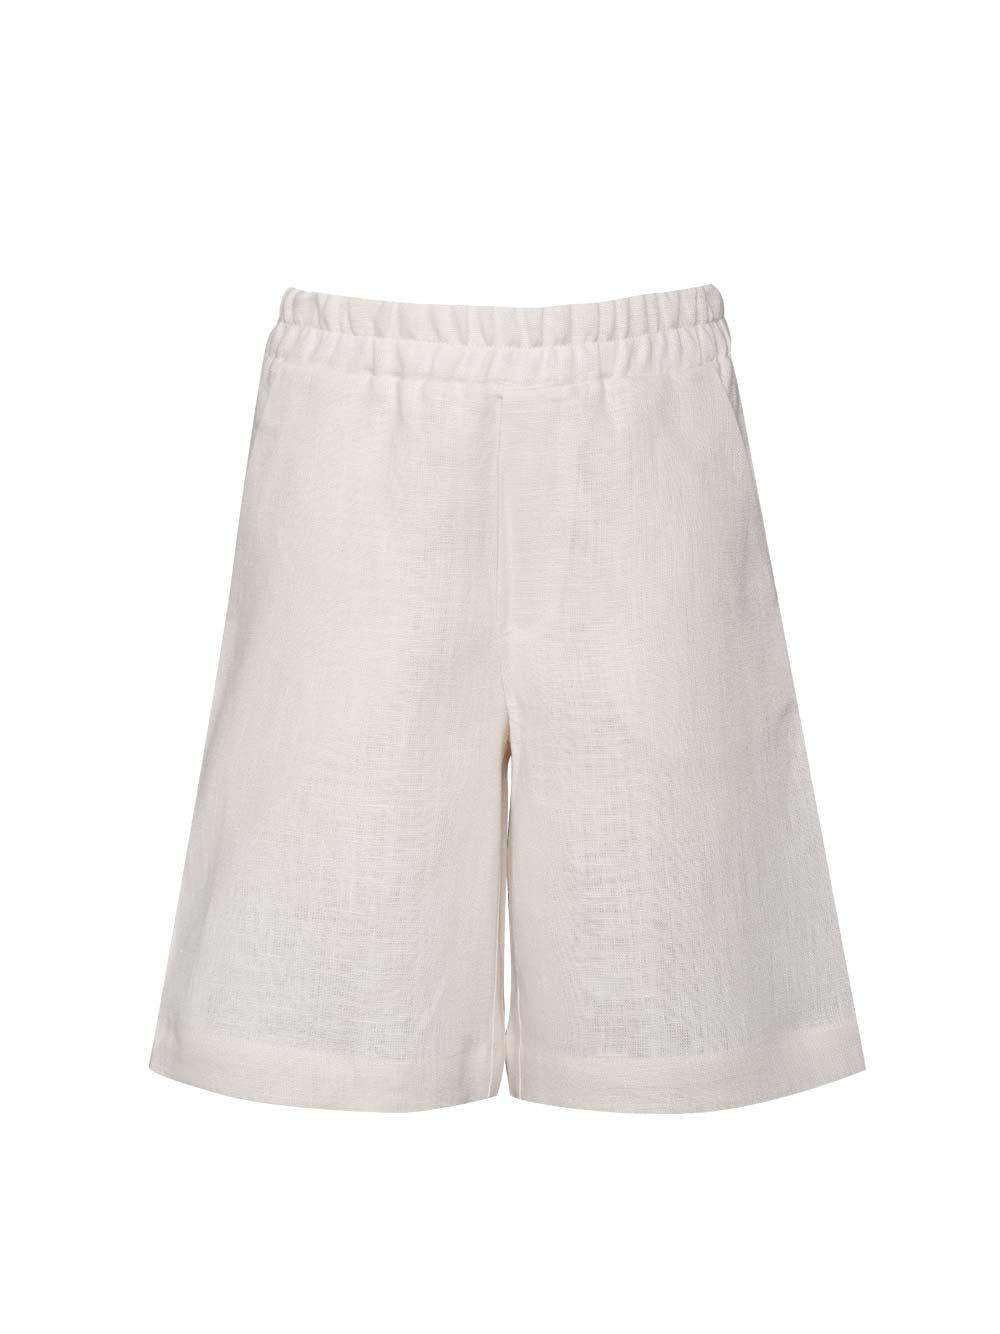 Forgetmenot Classic White Shorts